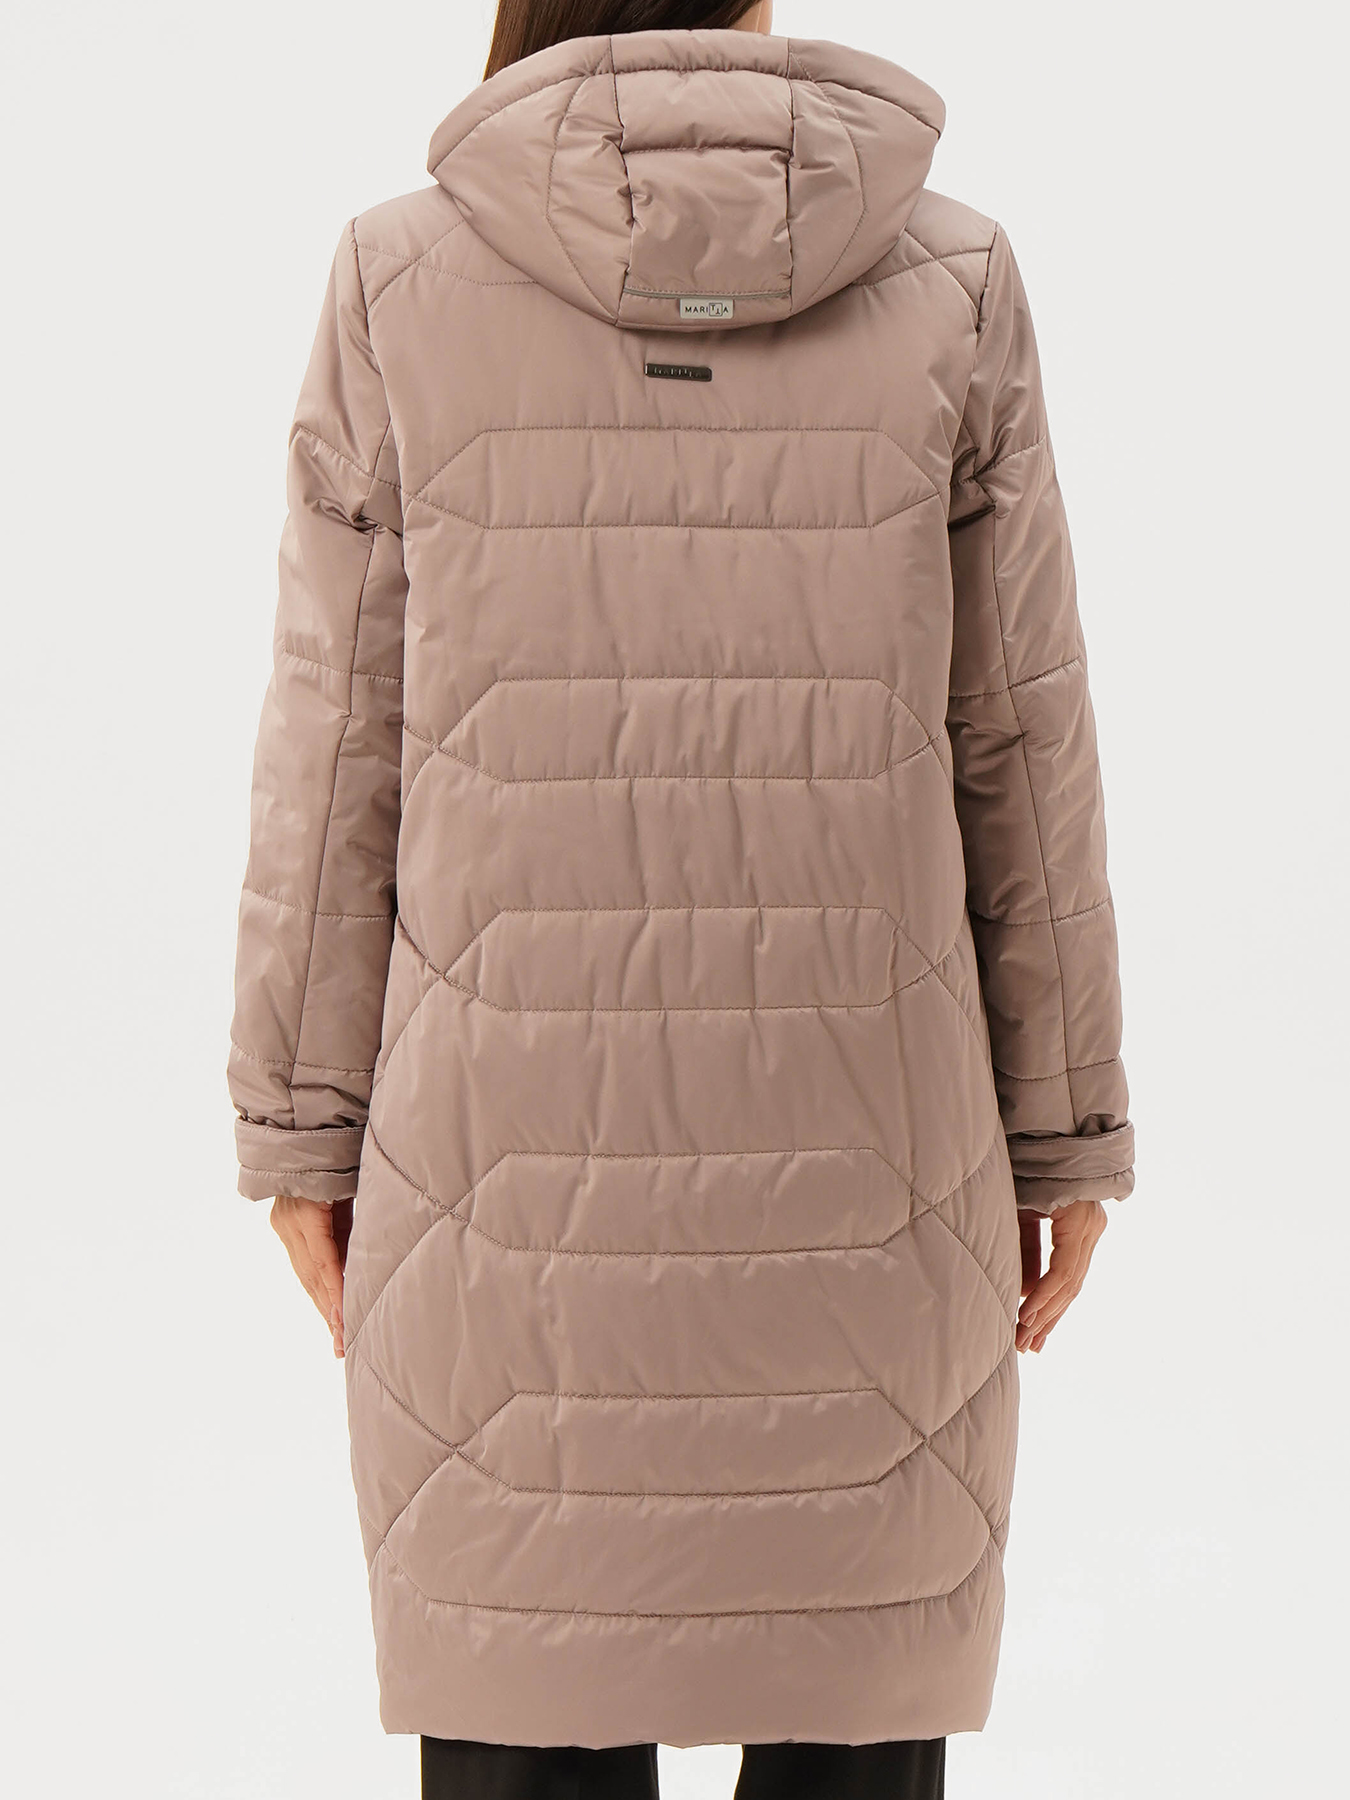 Пальто зимнее Maritta 433520-020, цвет бежевый, размер 44 - фото 6